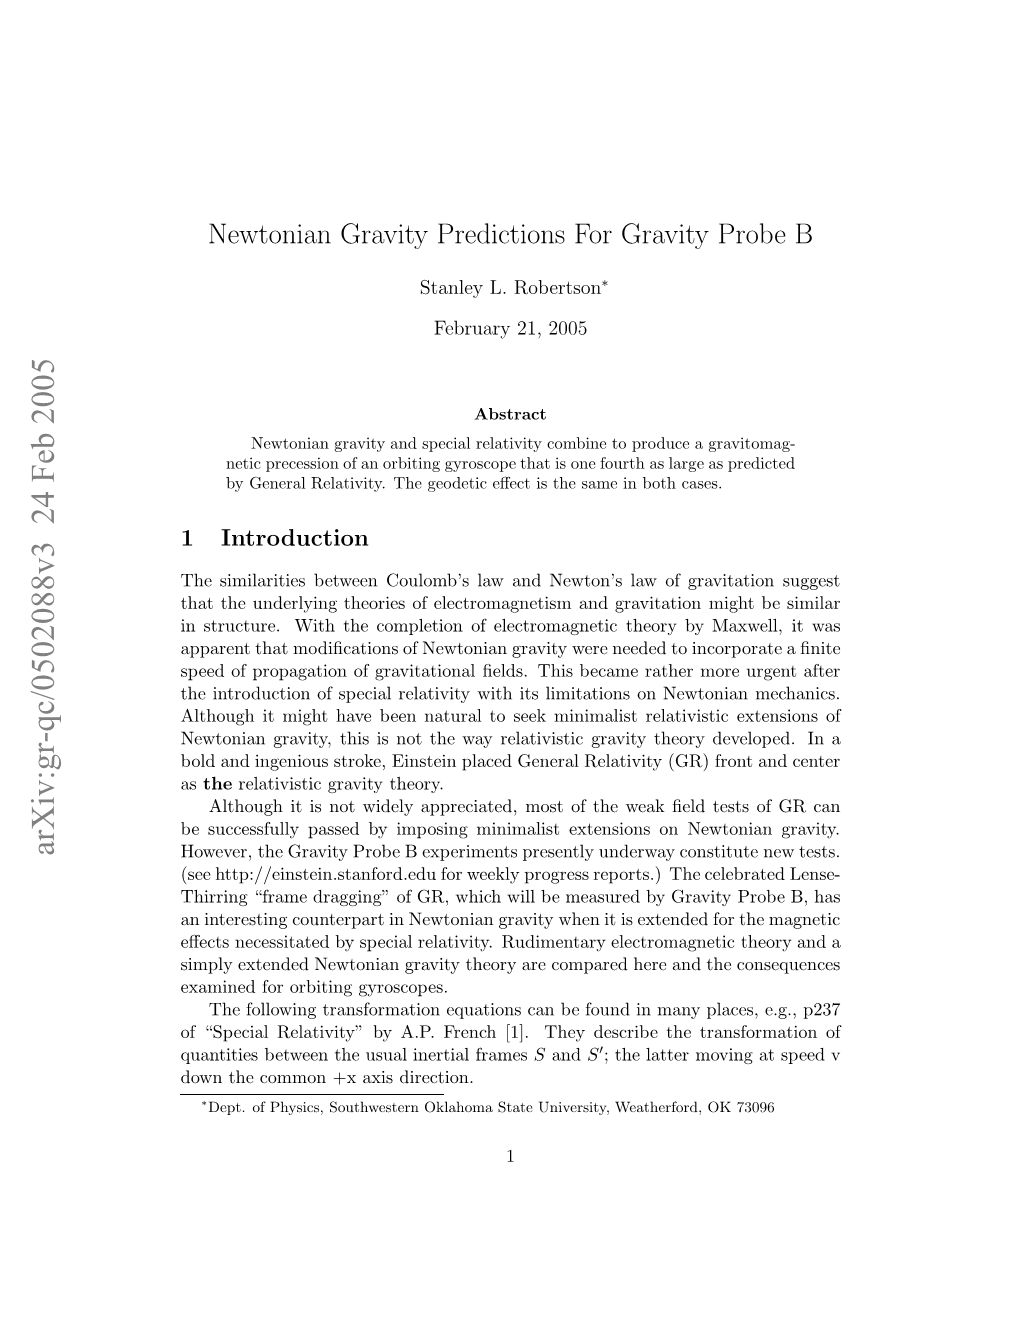 Newtonian Gravity Predictions for Gravity Probe B